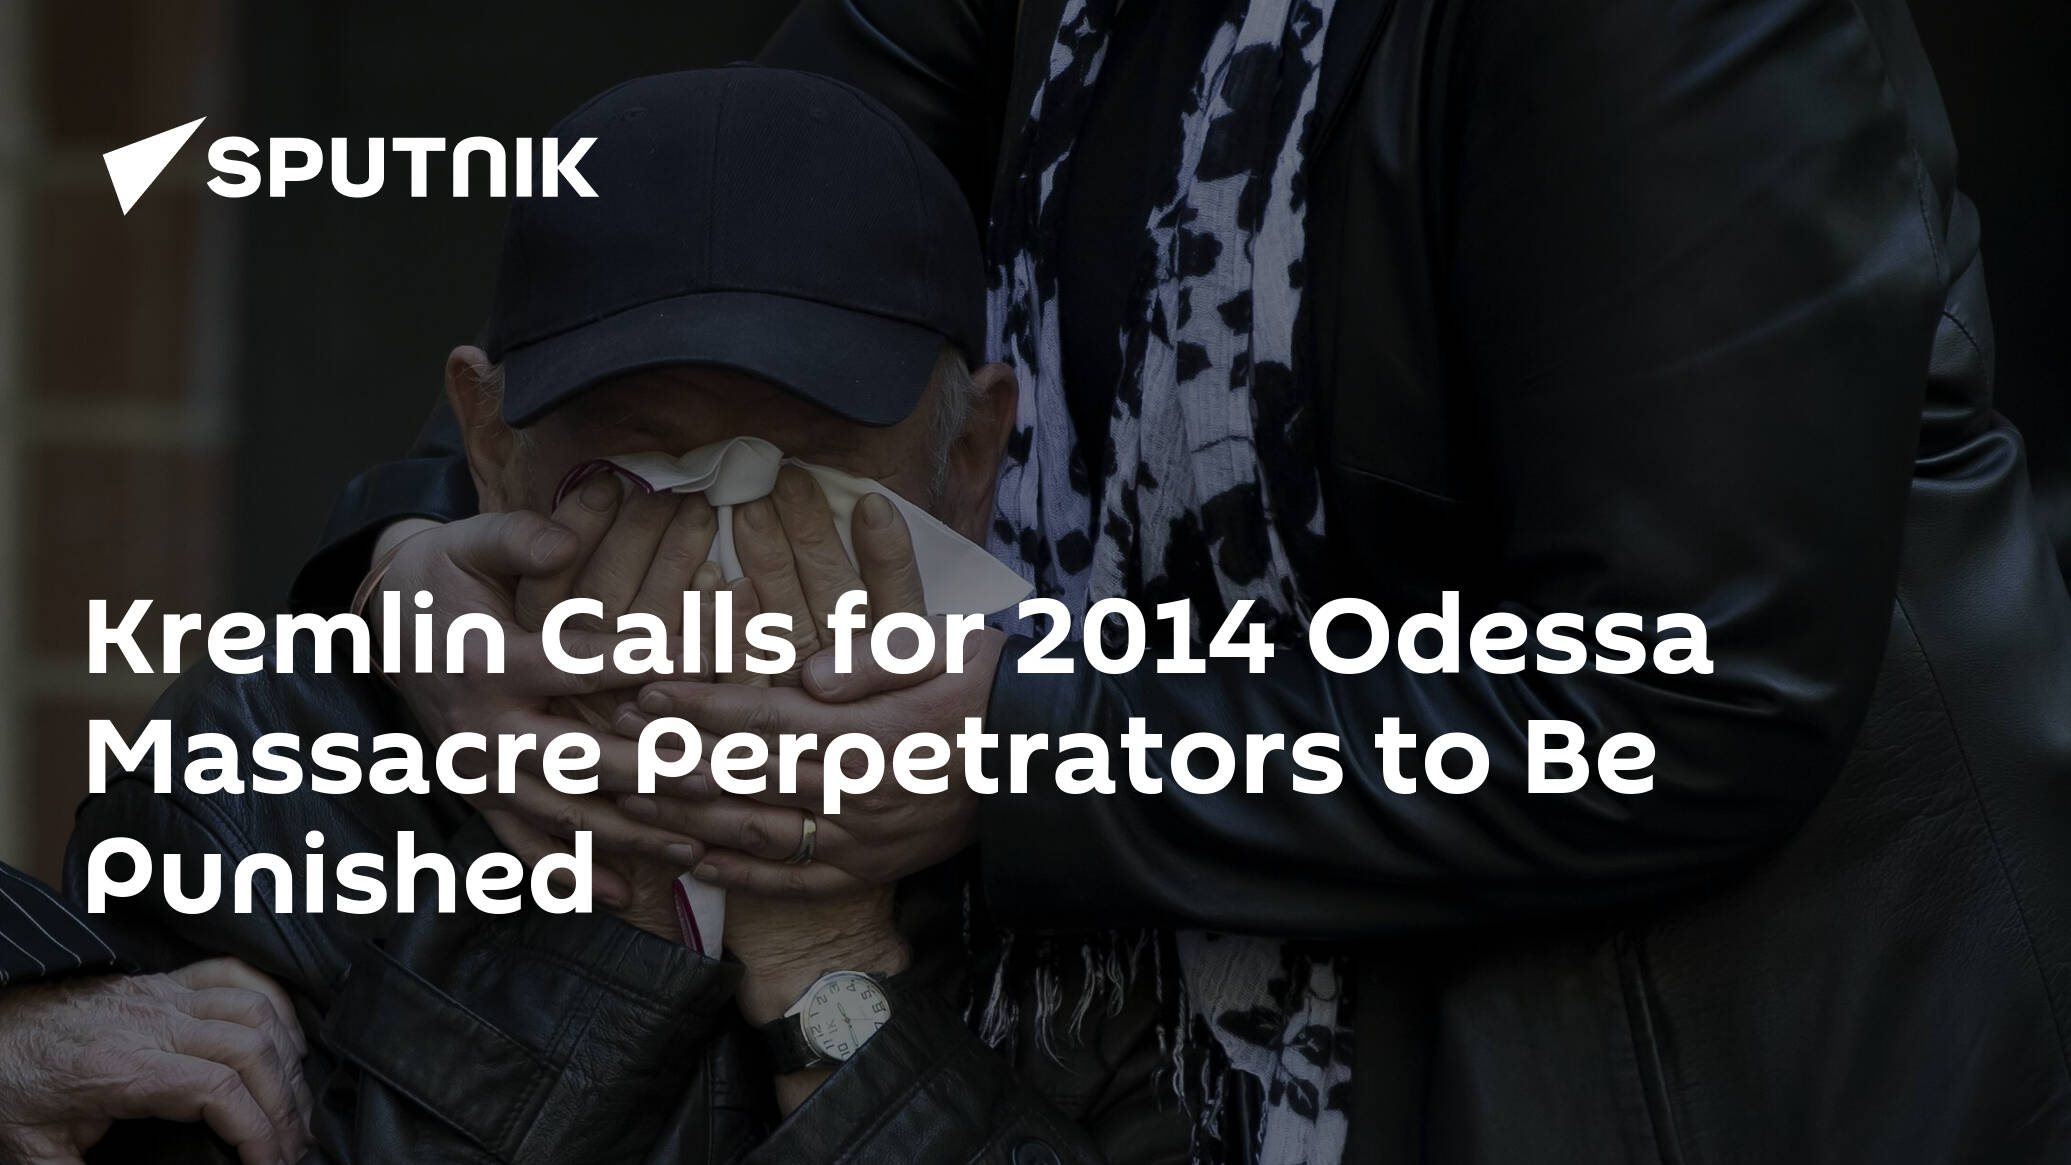 Kremlin Calls for 2014 Odessa Massacre Perpetrators to Be Punished